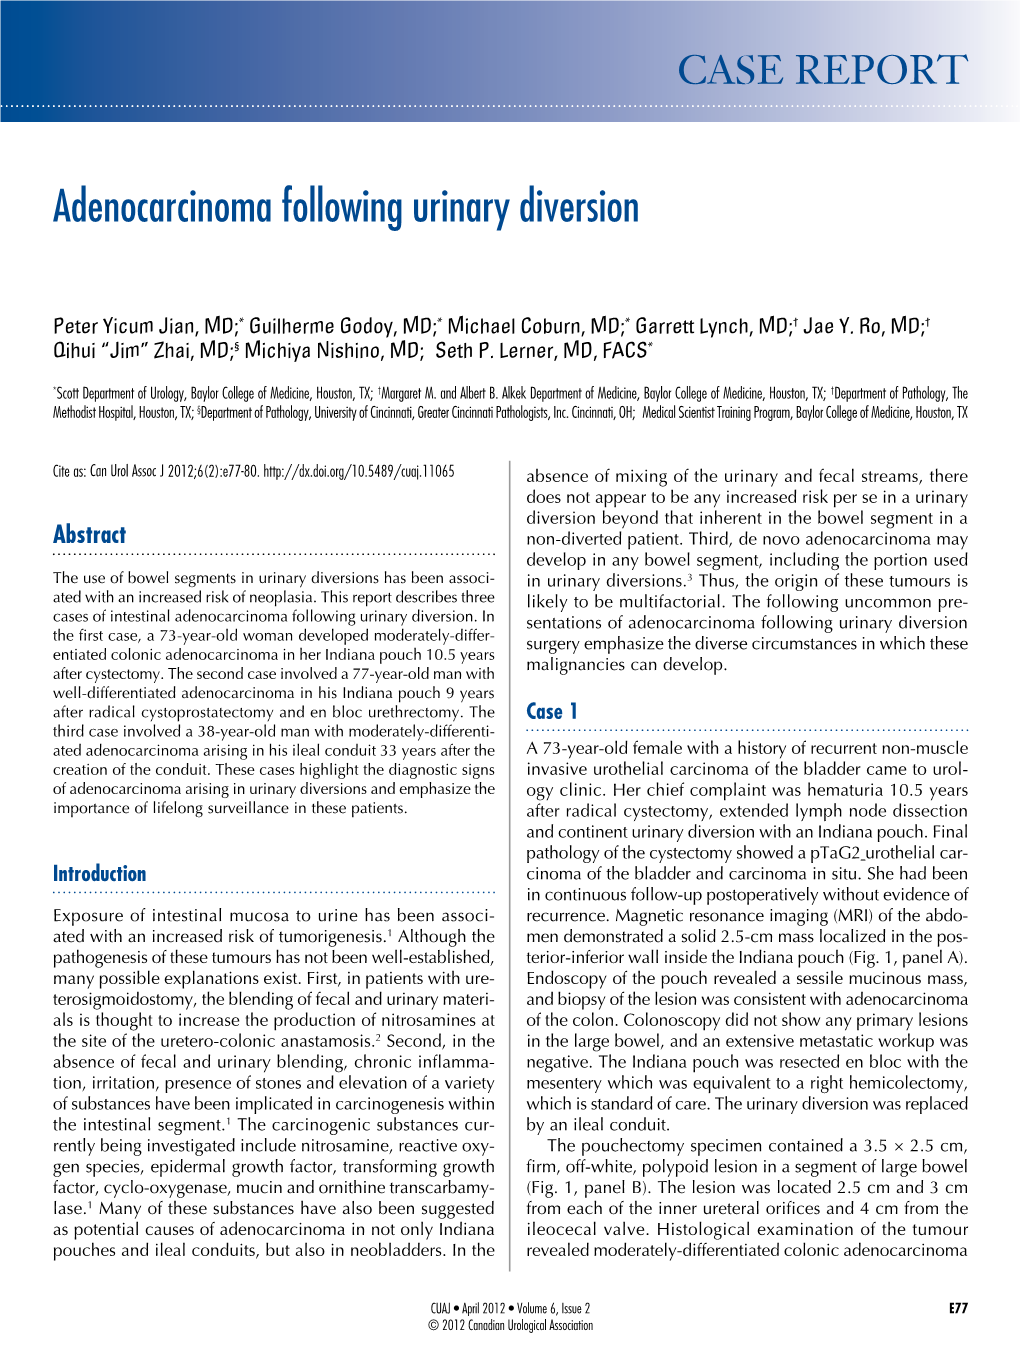 Adenocarcinoma Following Urinary Diversion